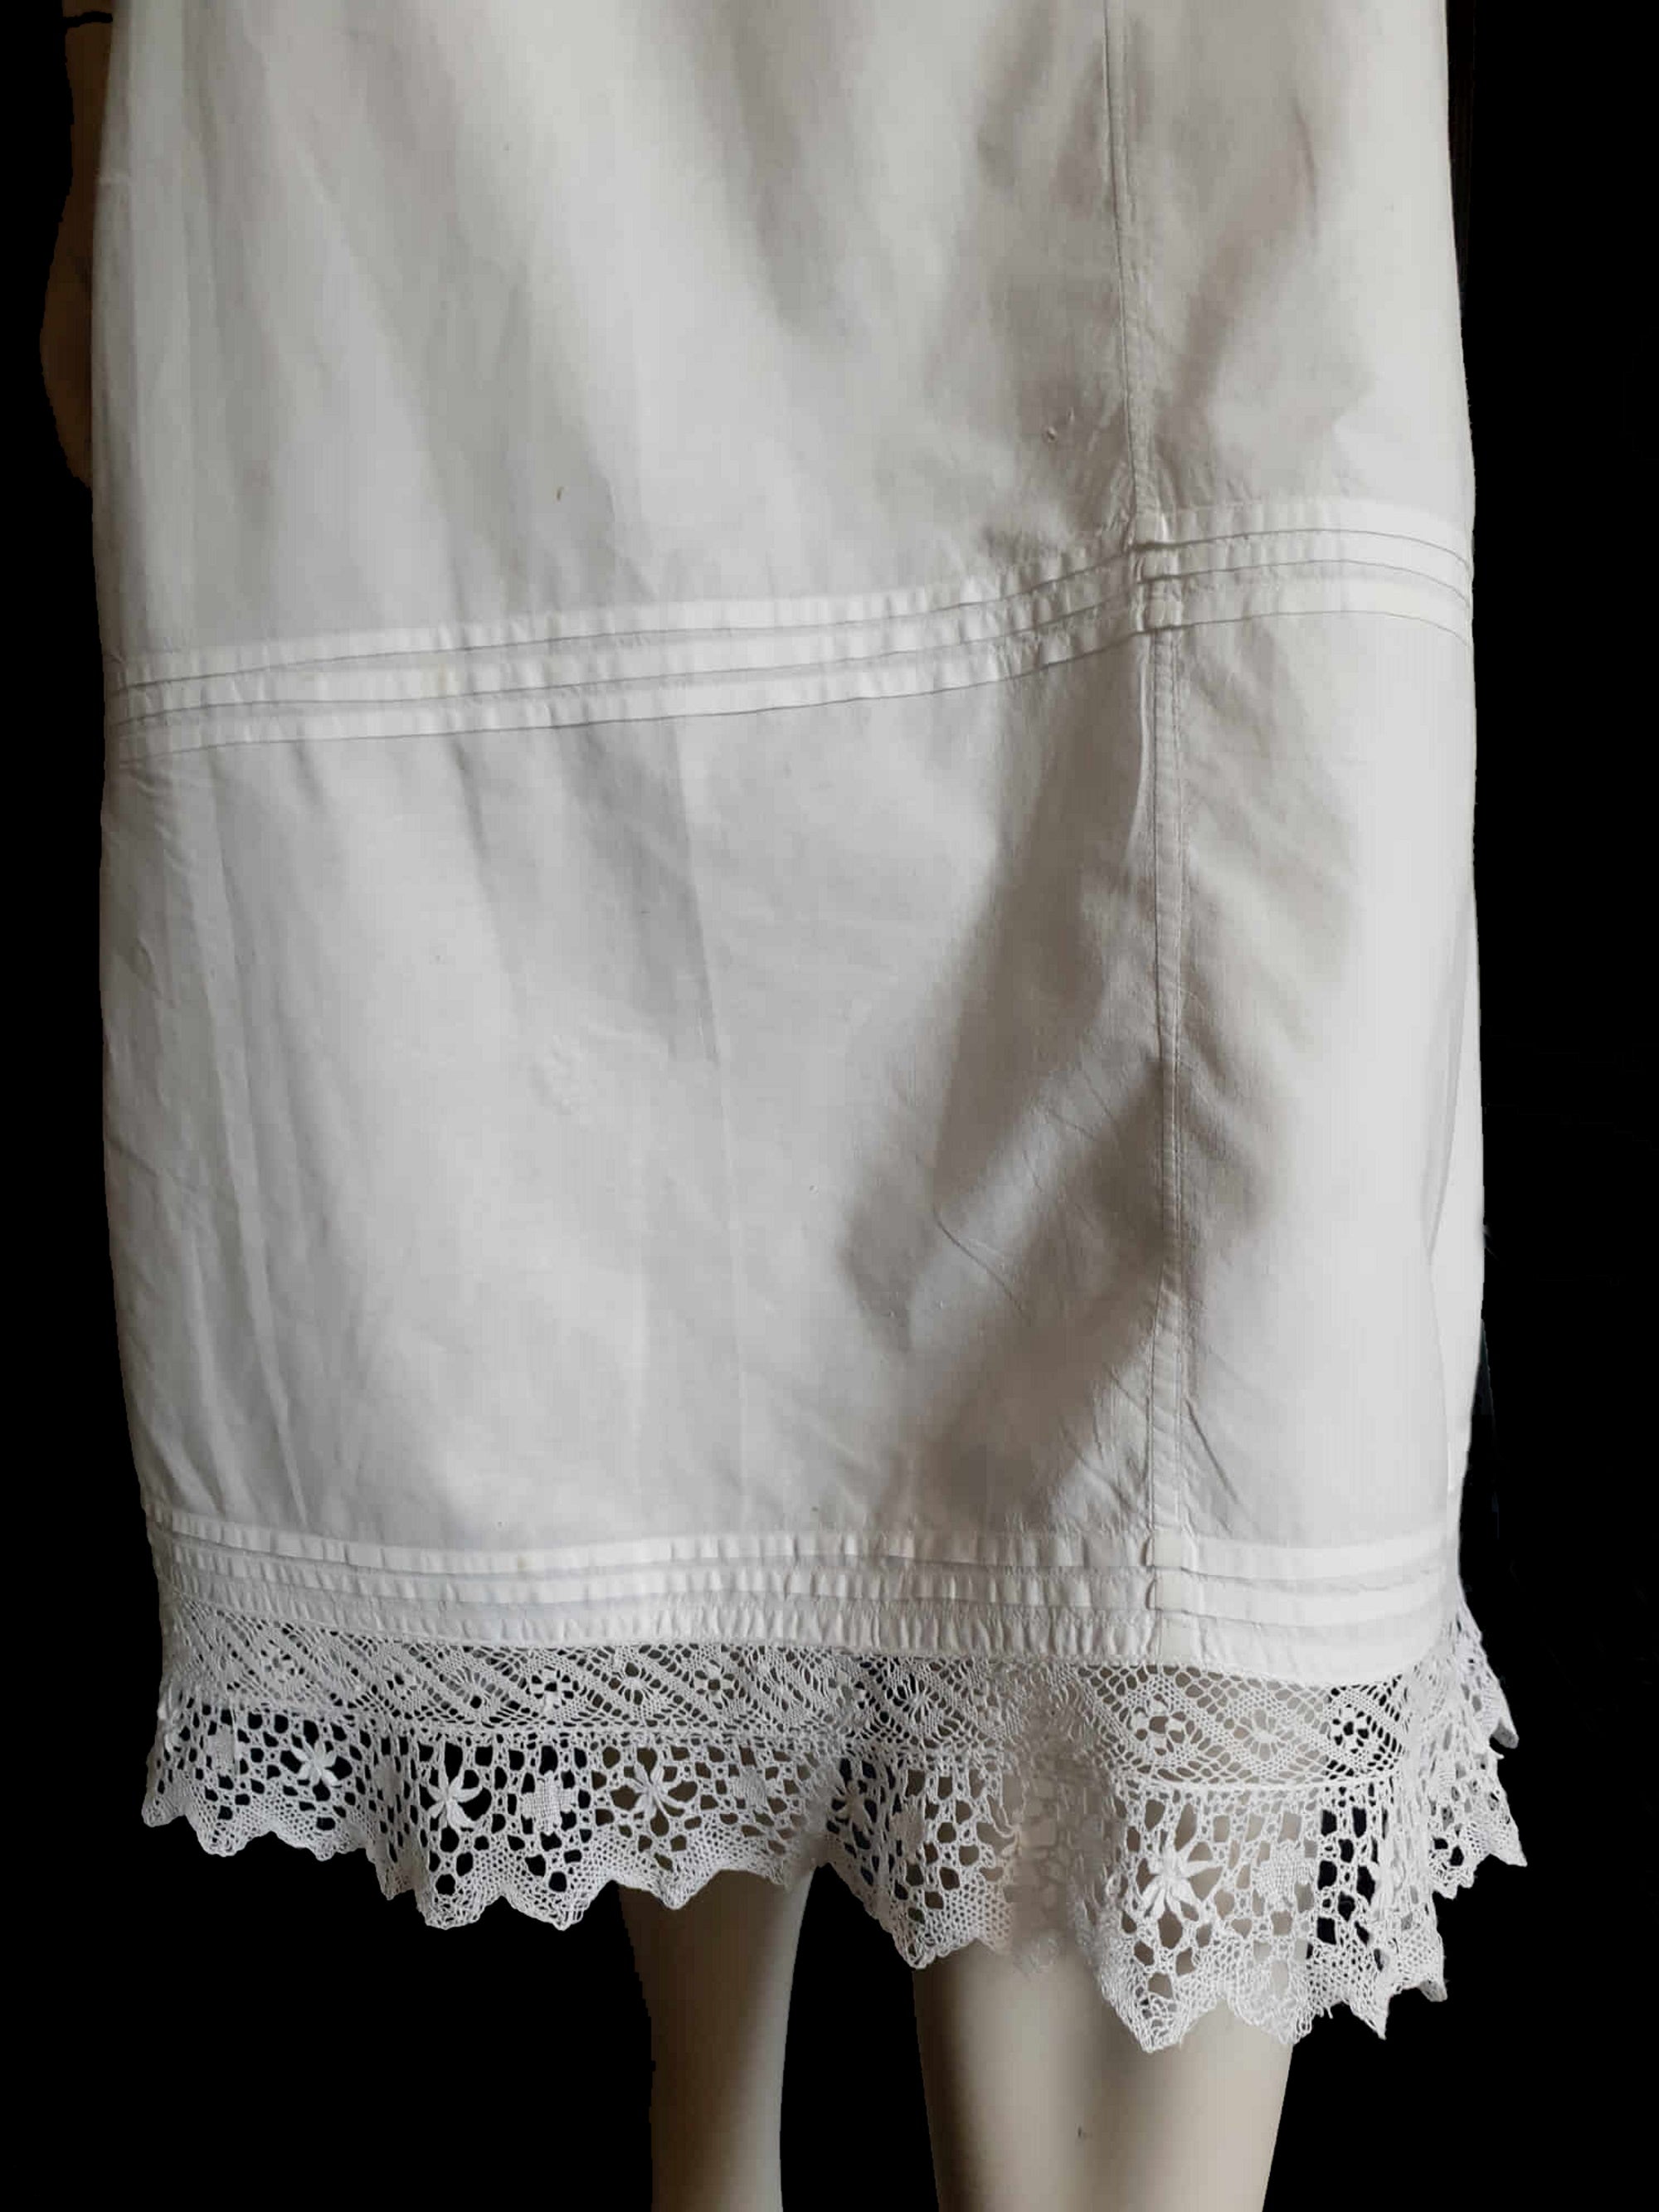 antique edwardian petticoat dress 1910s white cotton medium